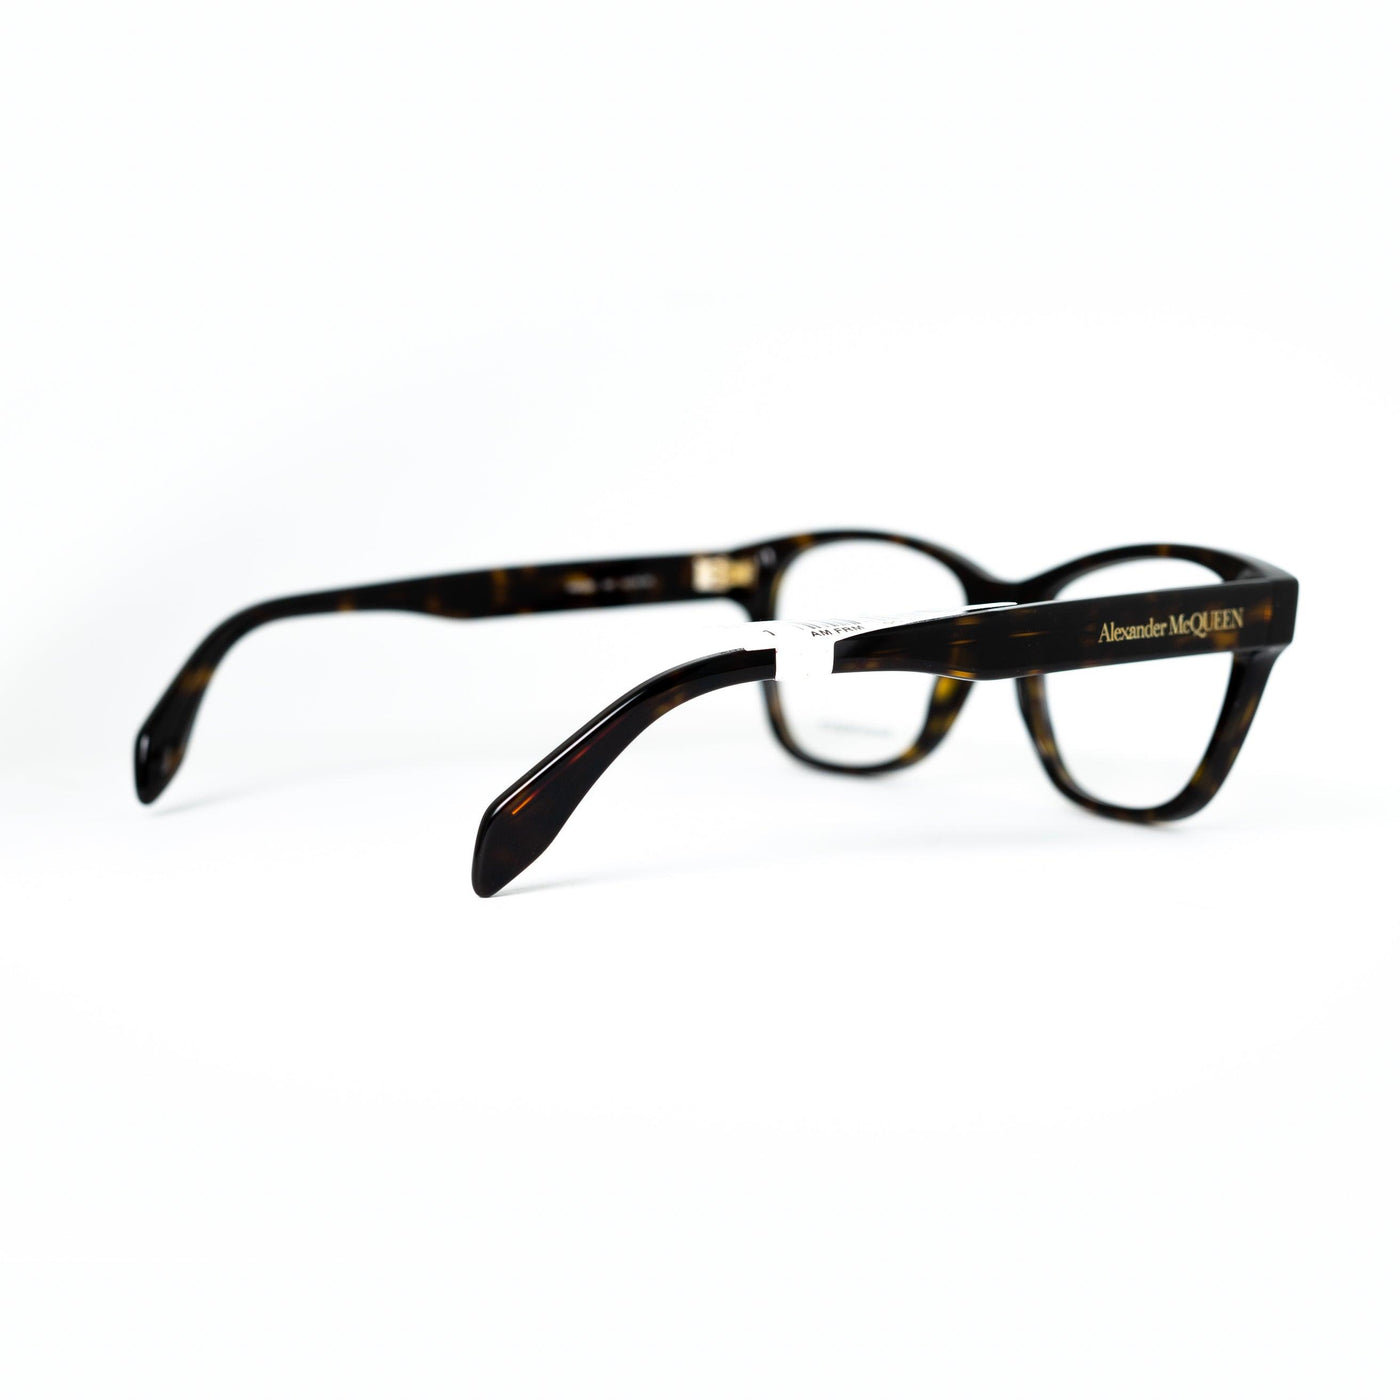 Alexander McQueen AM 0306O/002 | Eyeglasses - Vision Express Optical Philippines